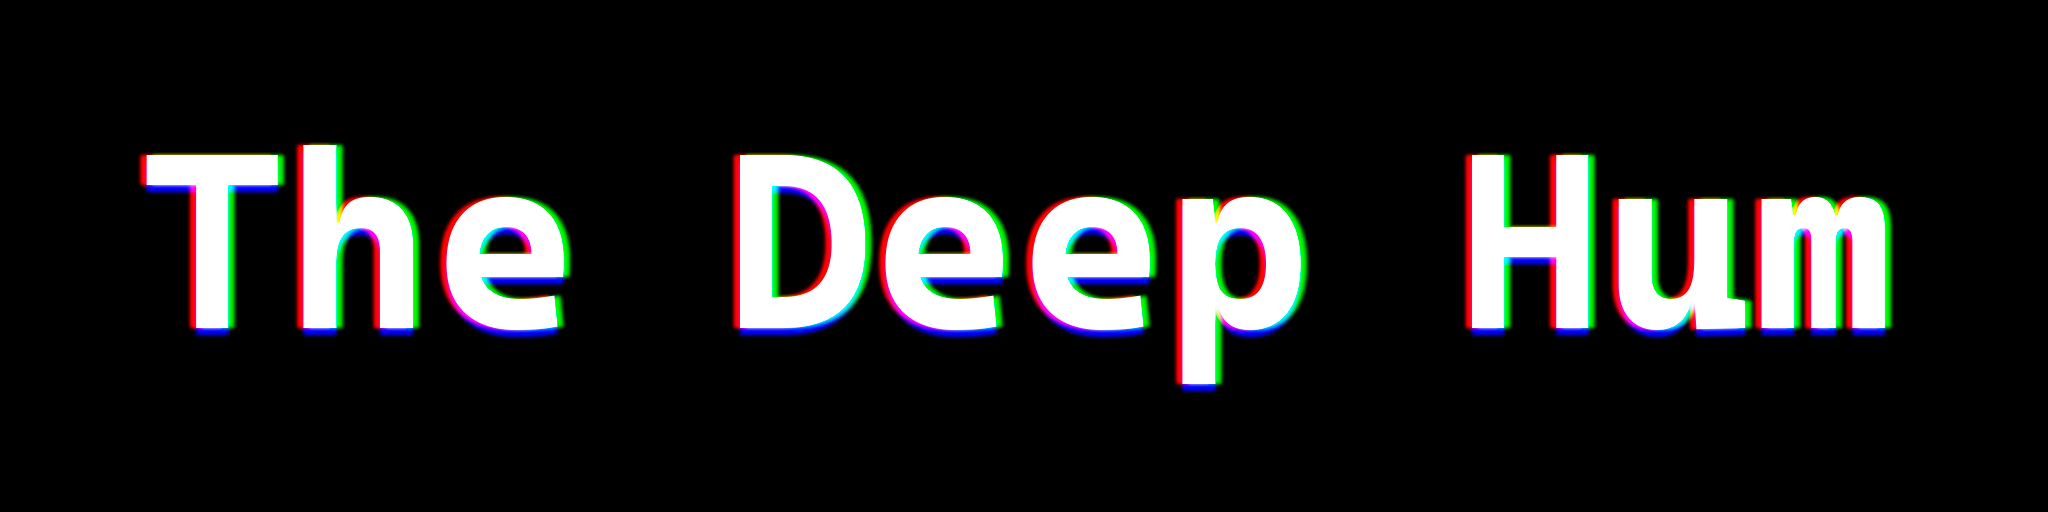 The Deep HUM (Intro)